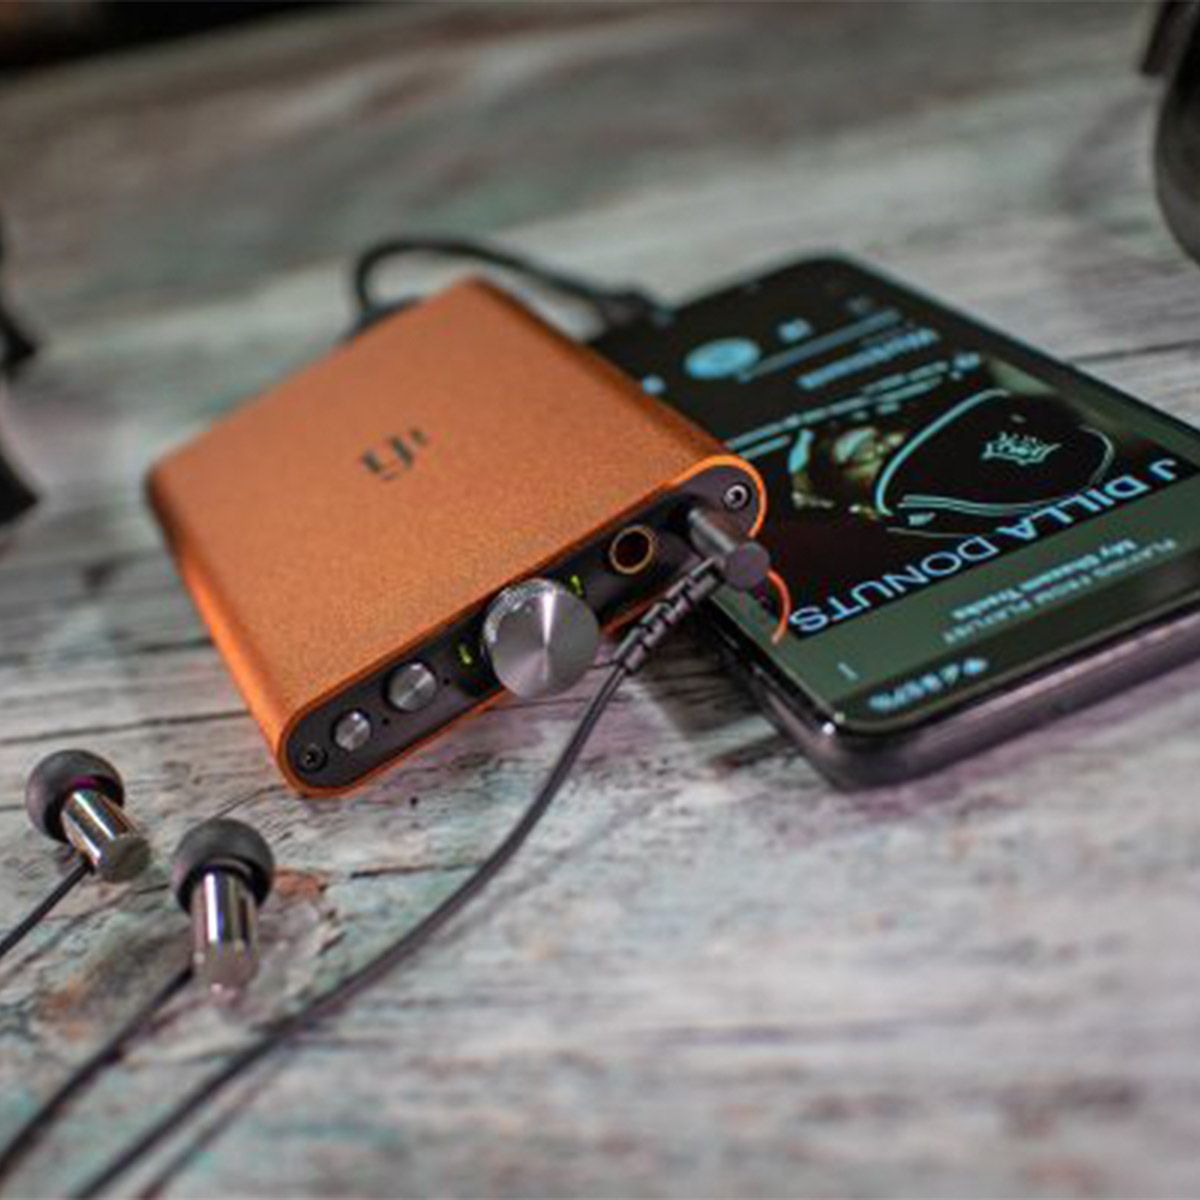 iFi Audio Hip-dac2 Portable Headphone Amp, Marble Surface with Phone